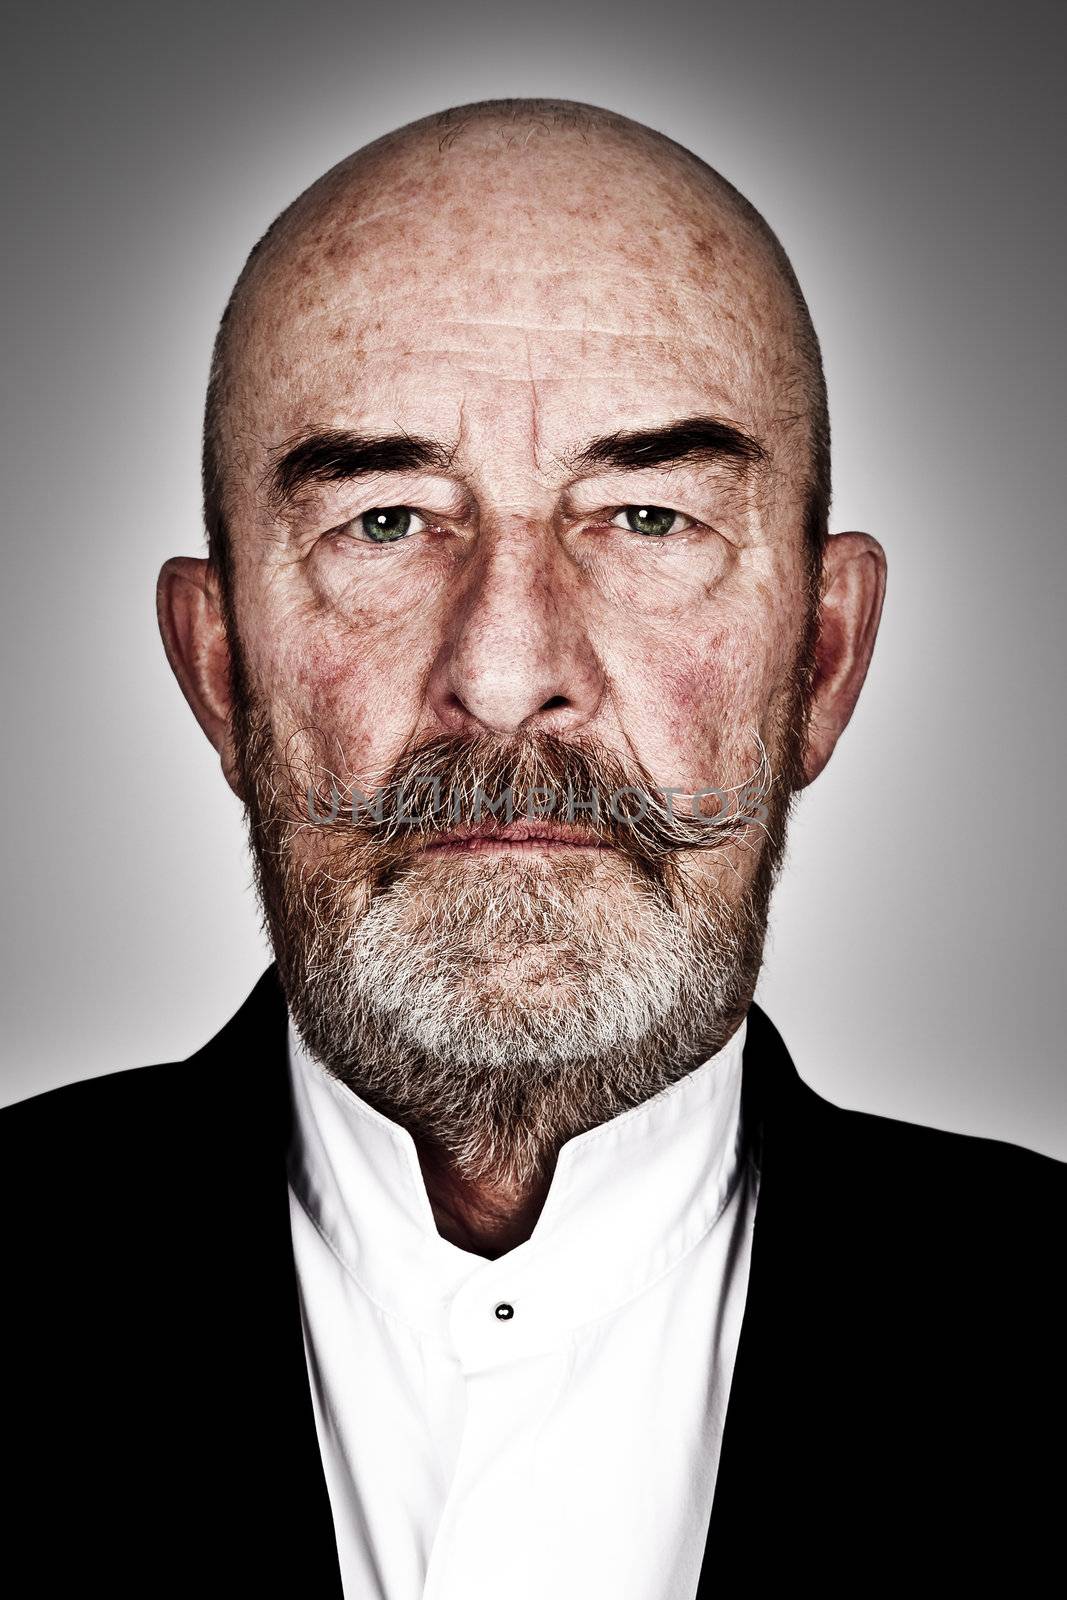 strange old man with a grey beard - high details